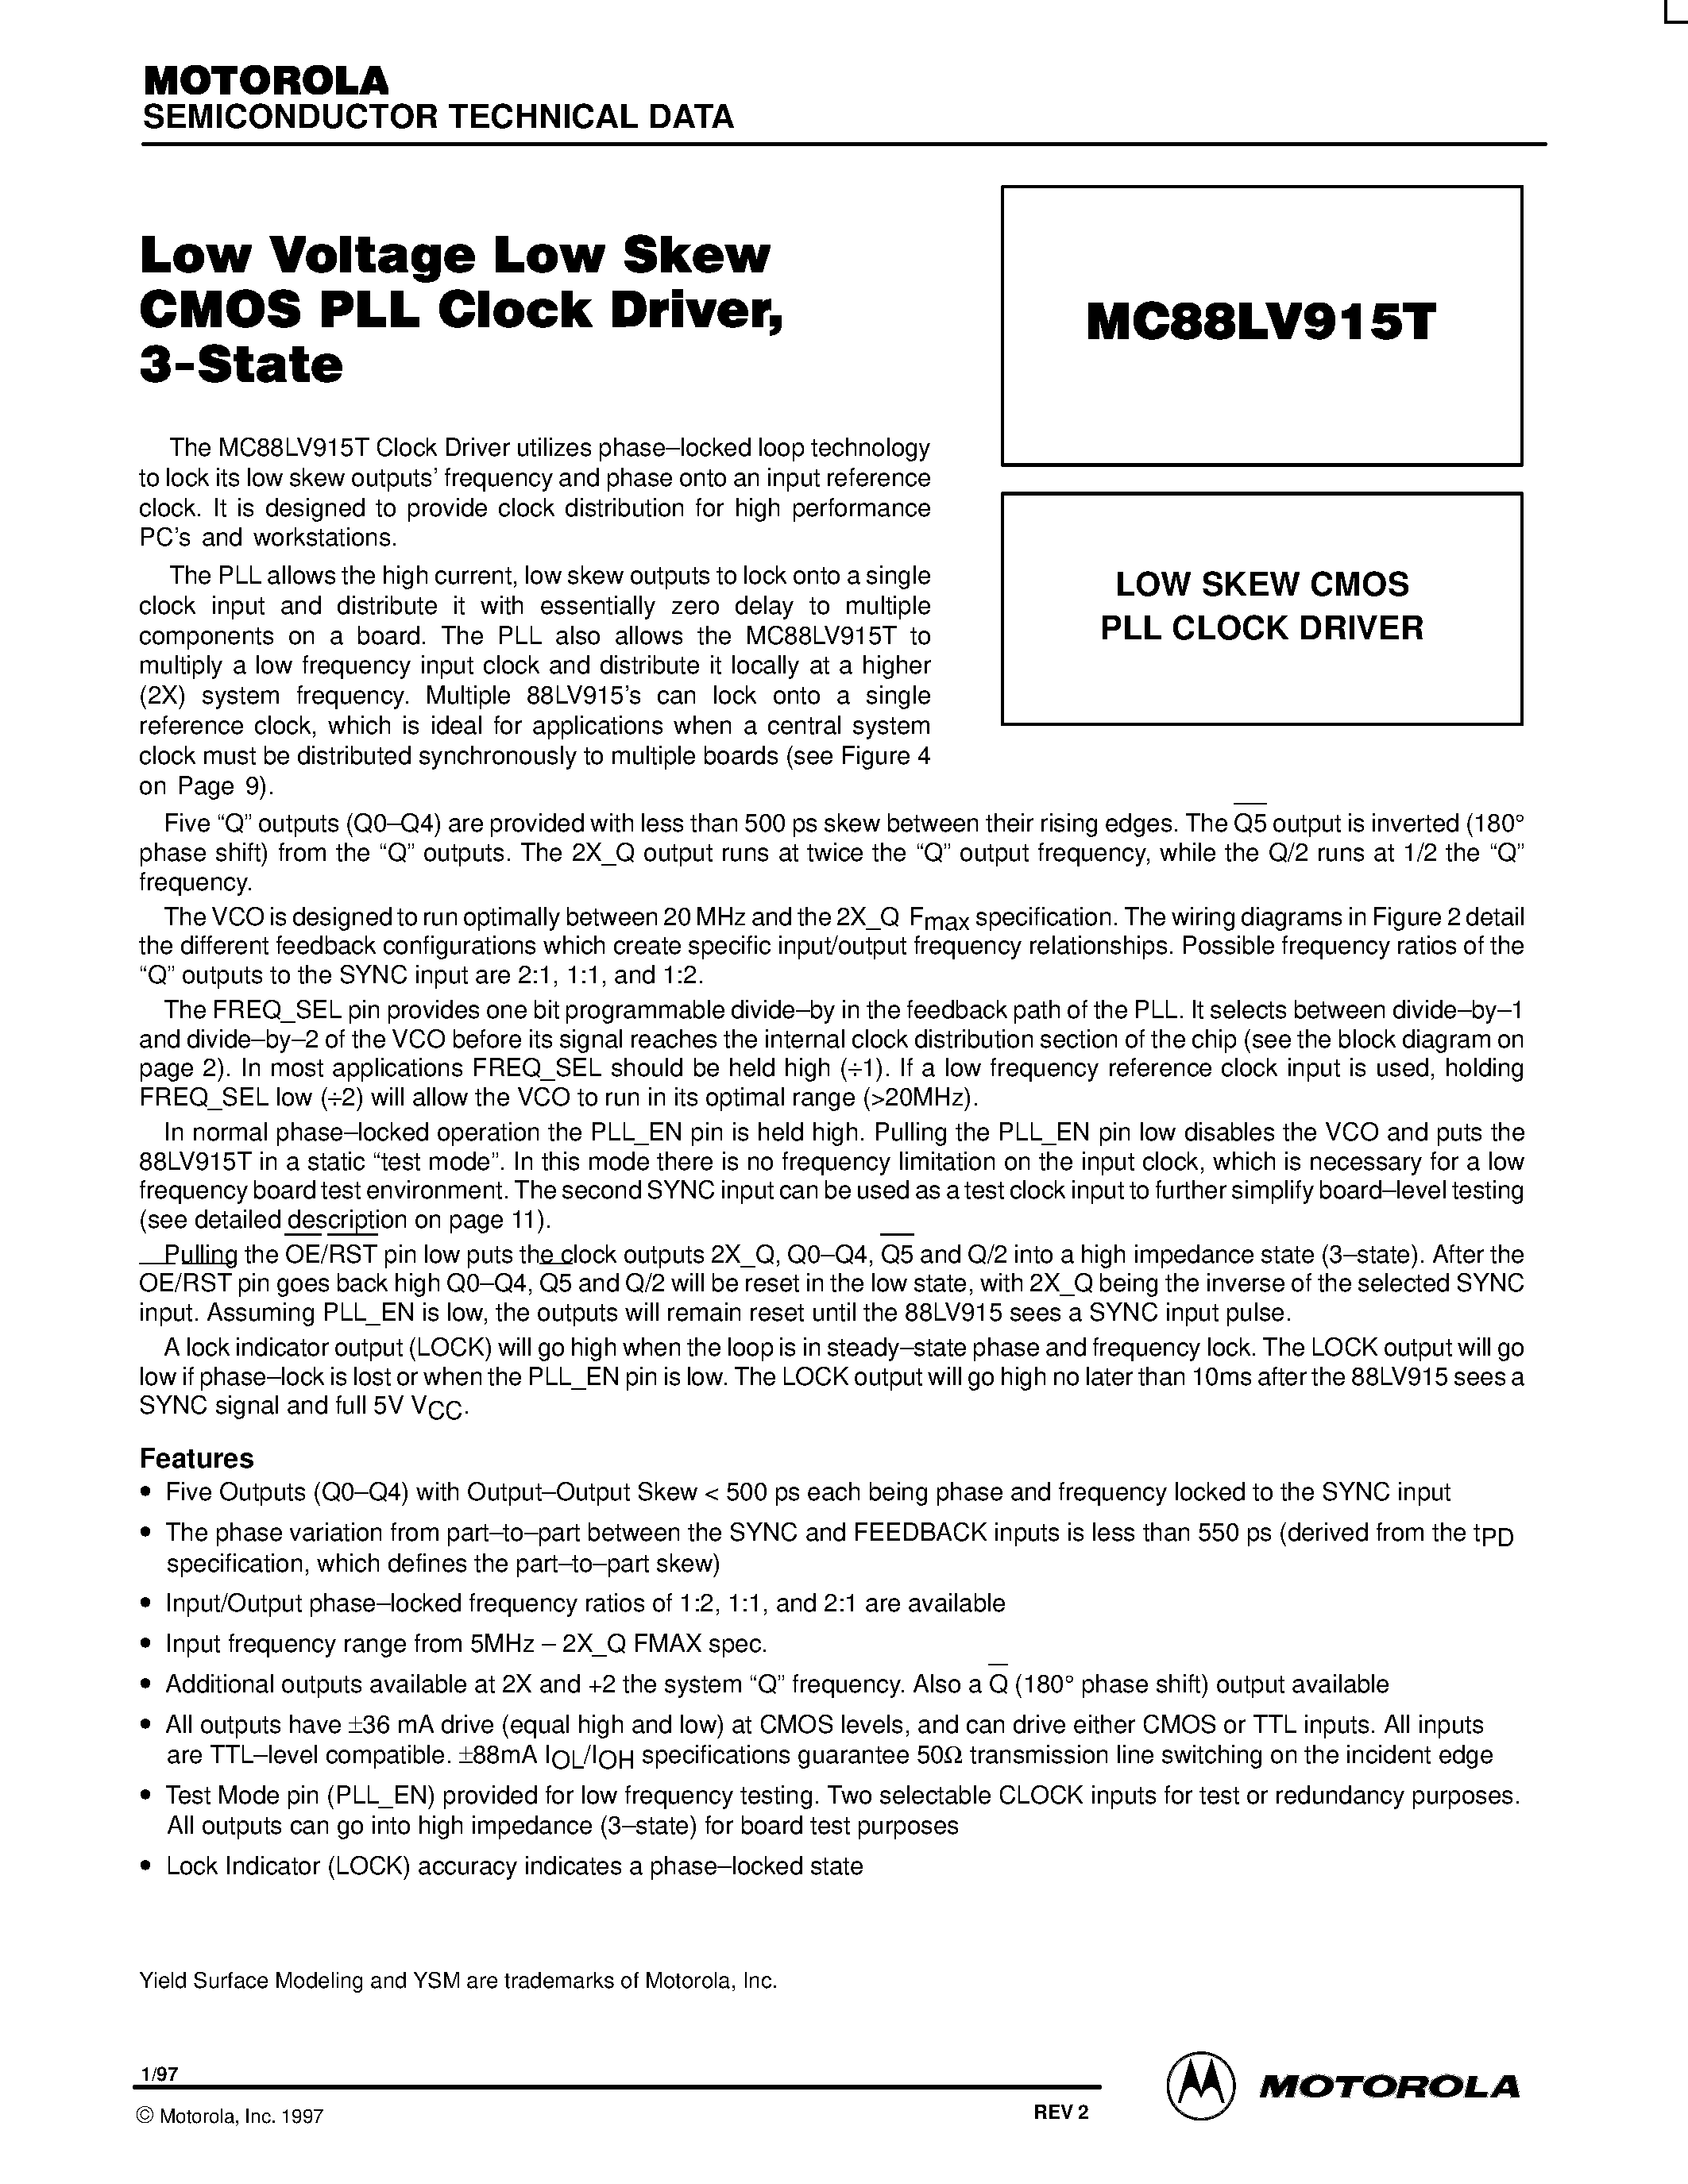 Datasheet MC88LV915 - LOW SKEW CMOS PLL CLOCK DRIVER page 1